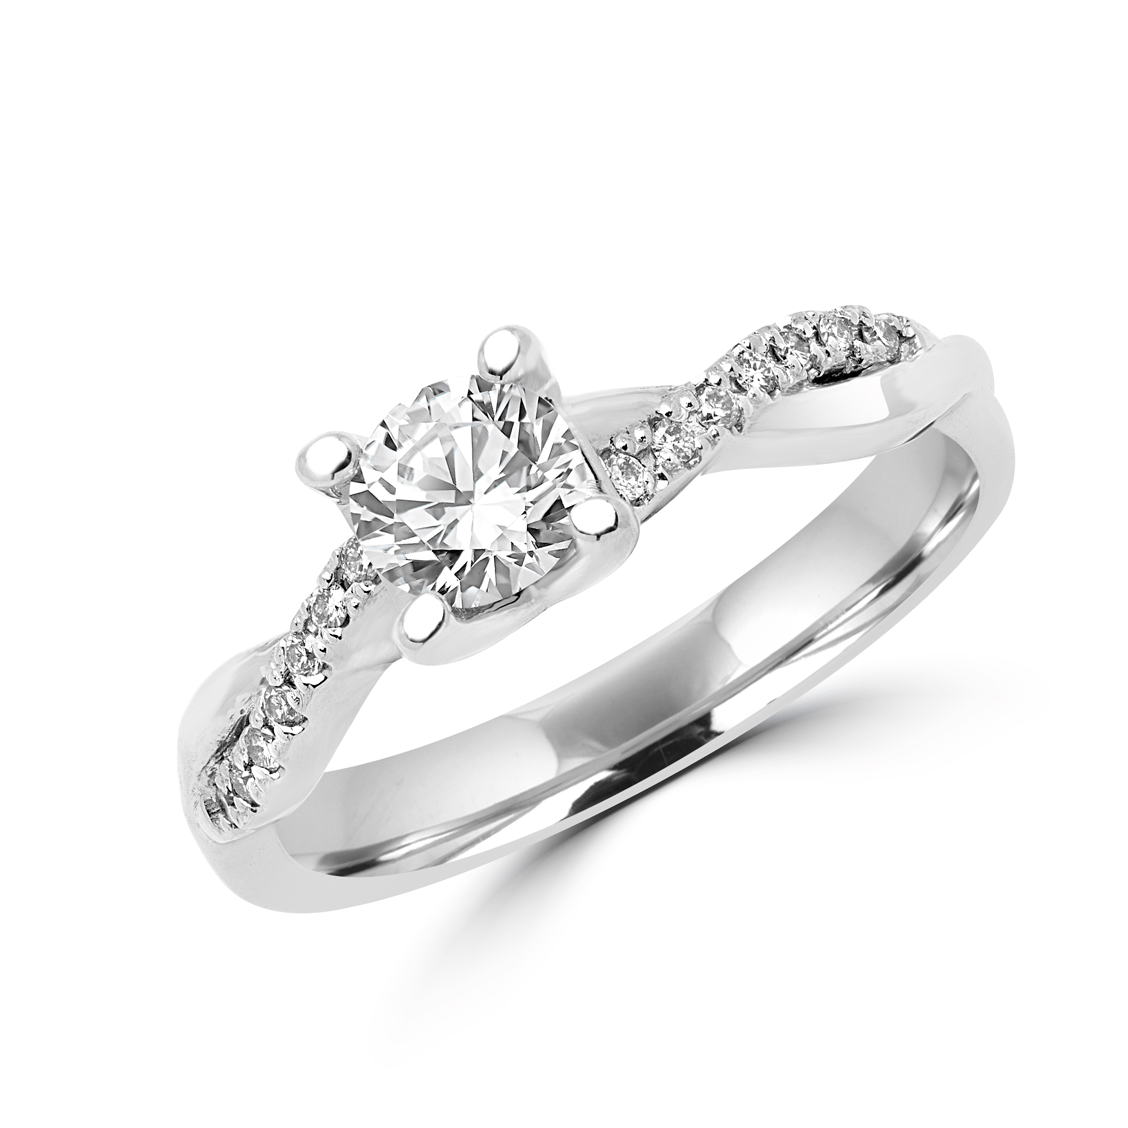 Twist of love lab-grown diamond ring 1.14 (ctw) in 14k gold